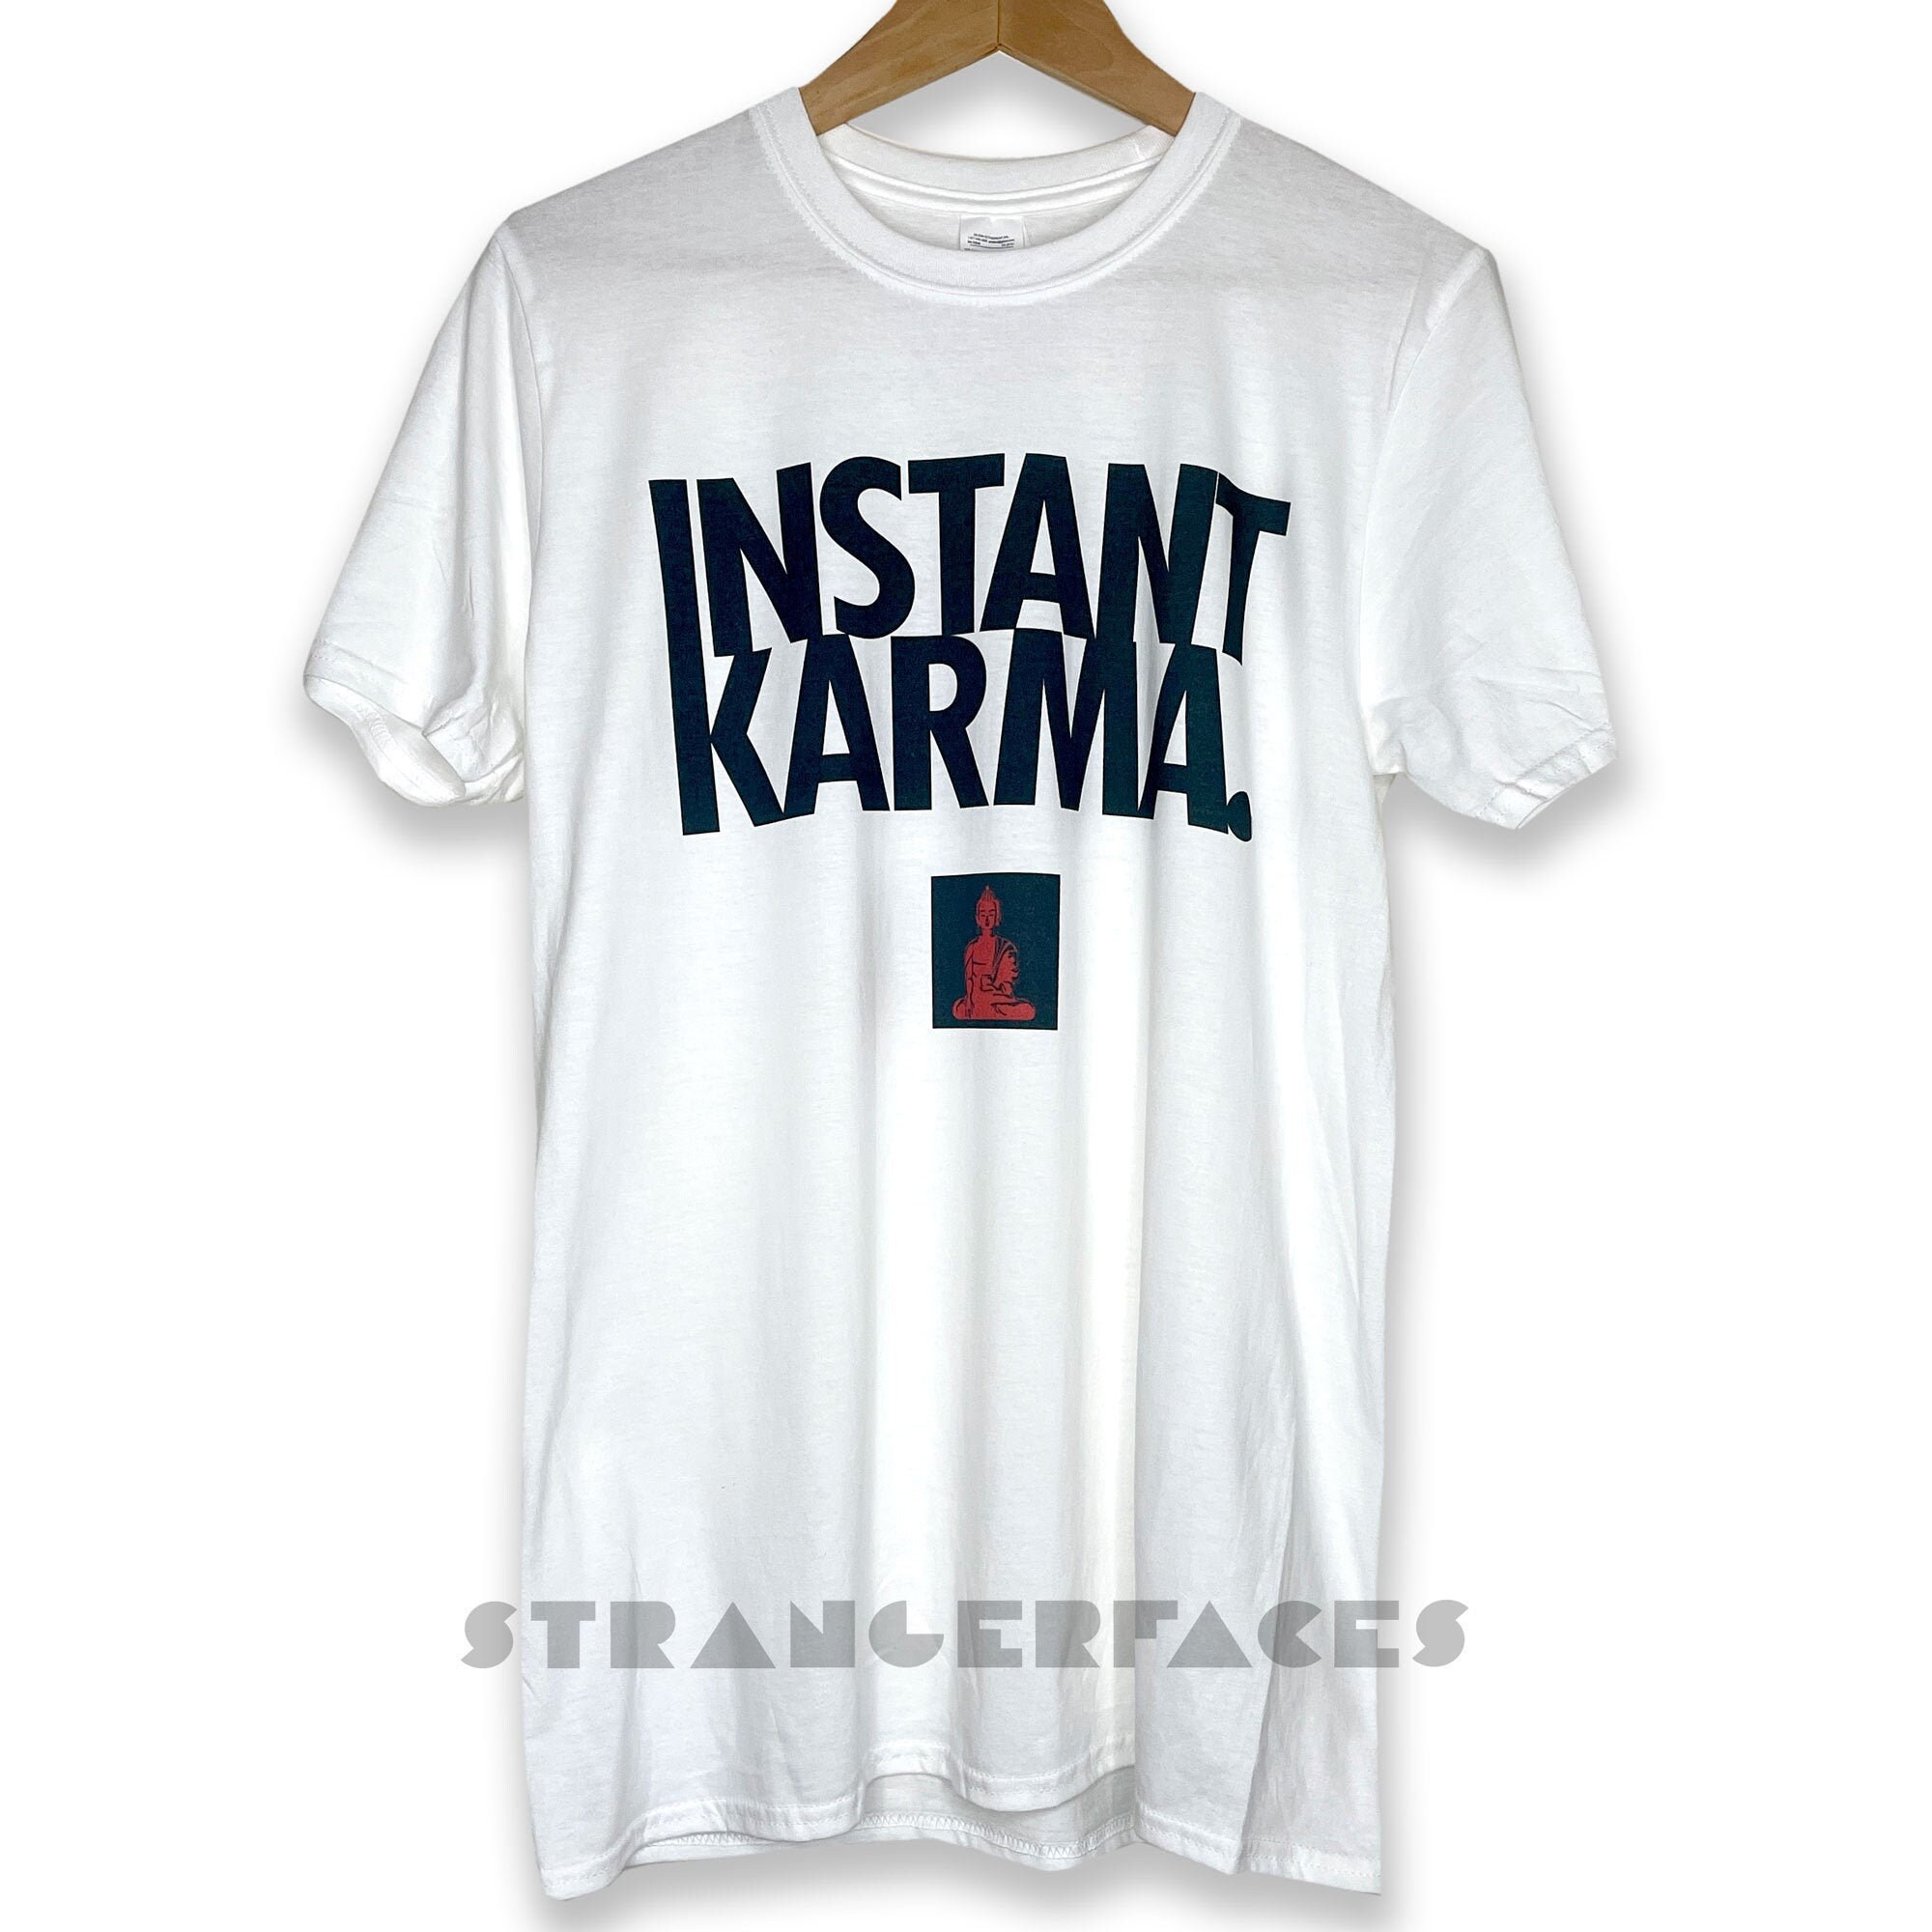 Frank Ocean INSTANT KARMA T-shirt blond buddhism Frank | Etsy